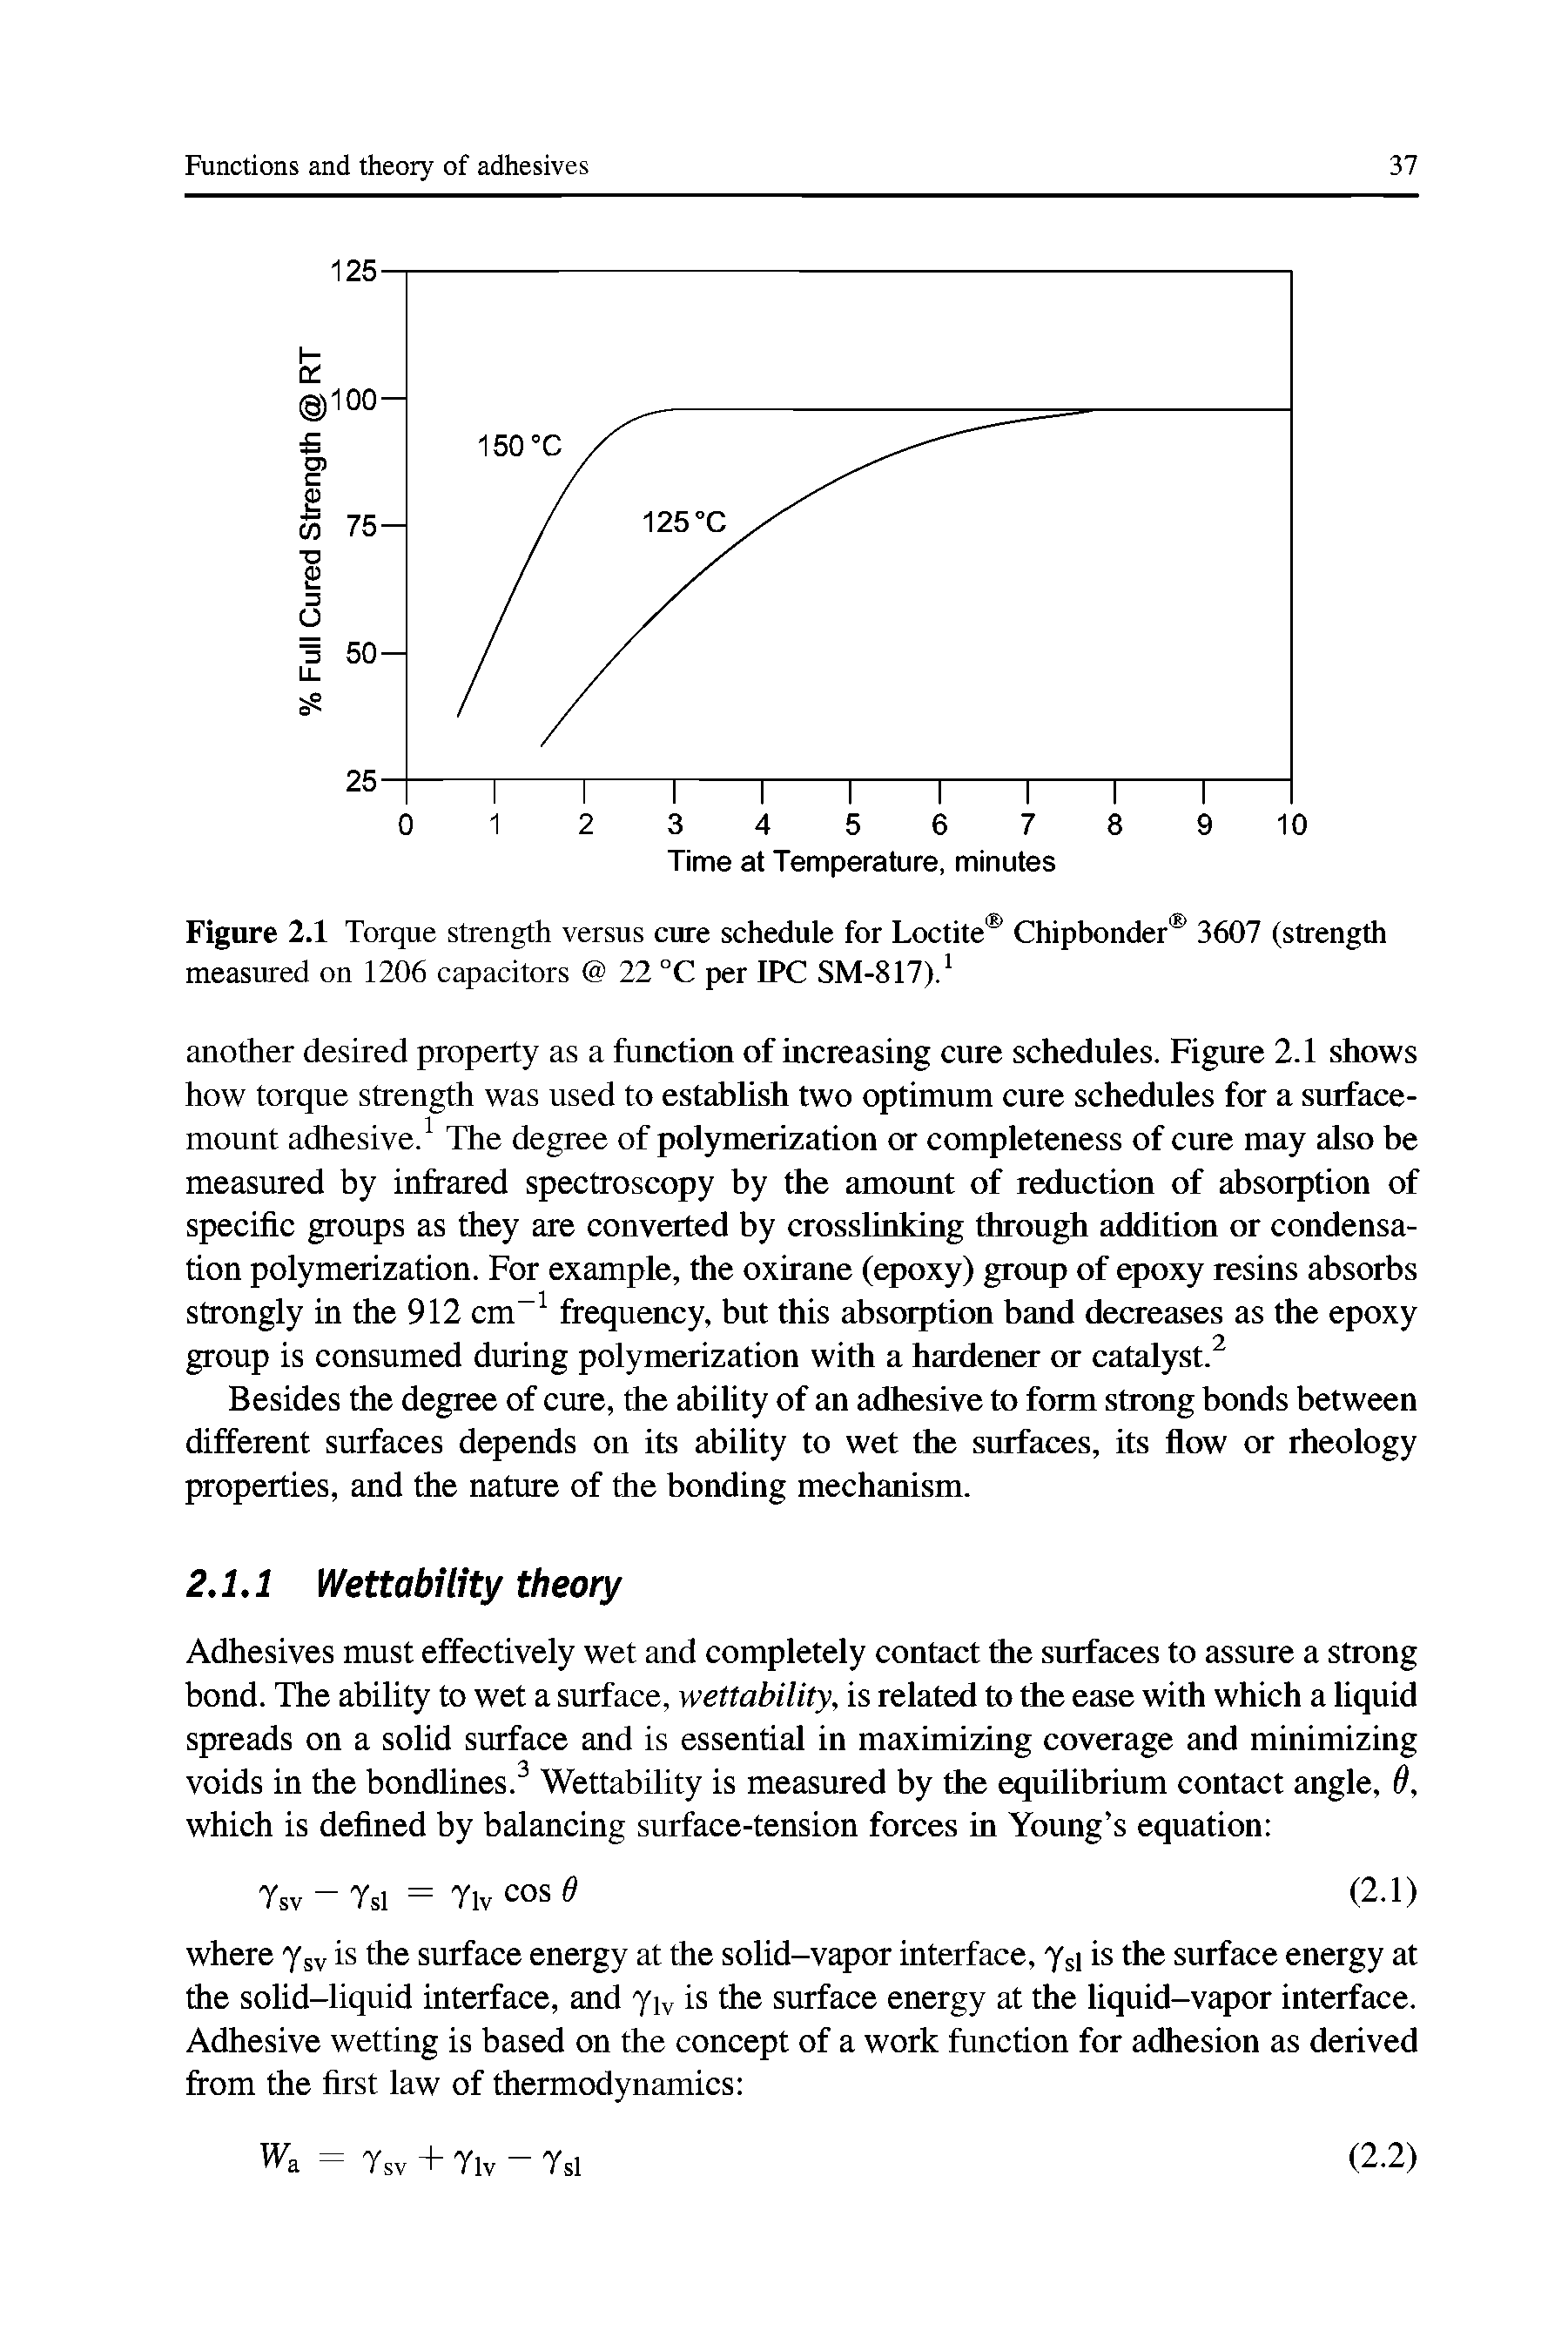 Figure 2.1 Torque strength versus cure schedule for Loctite Chipbonder 3607 (strength measured on 1206 capacitors 22 °C per IPC SM-817). ...